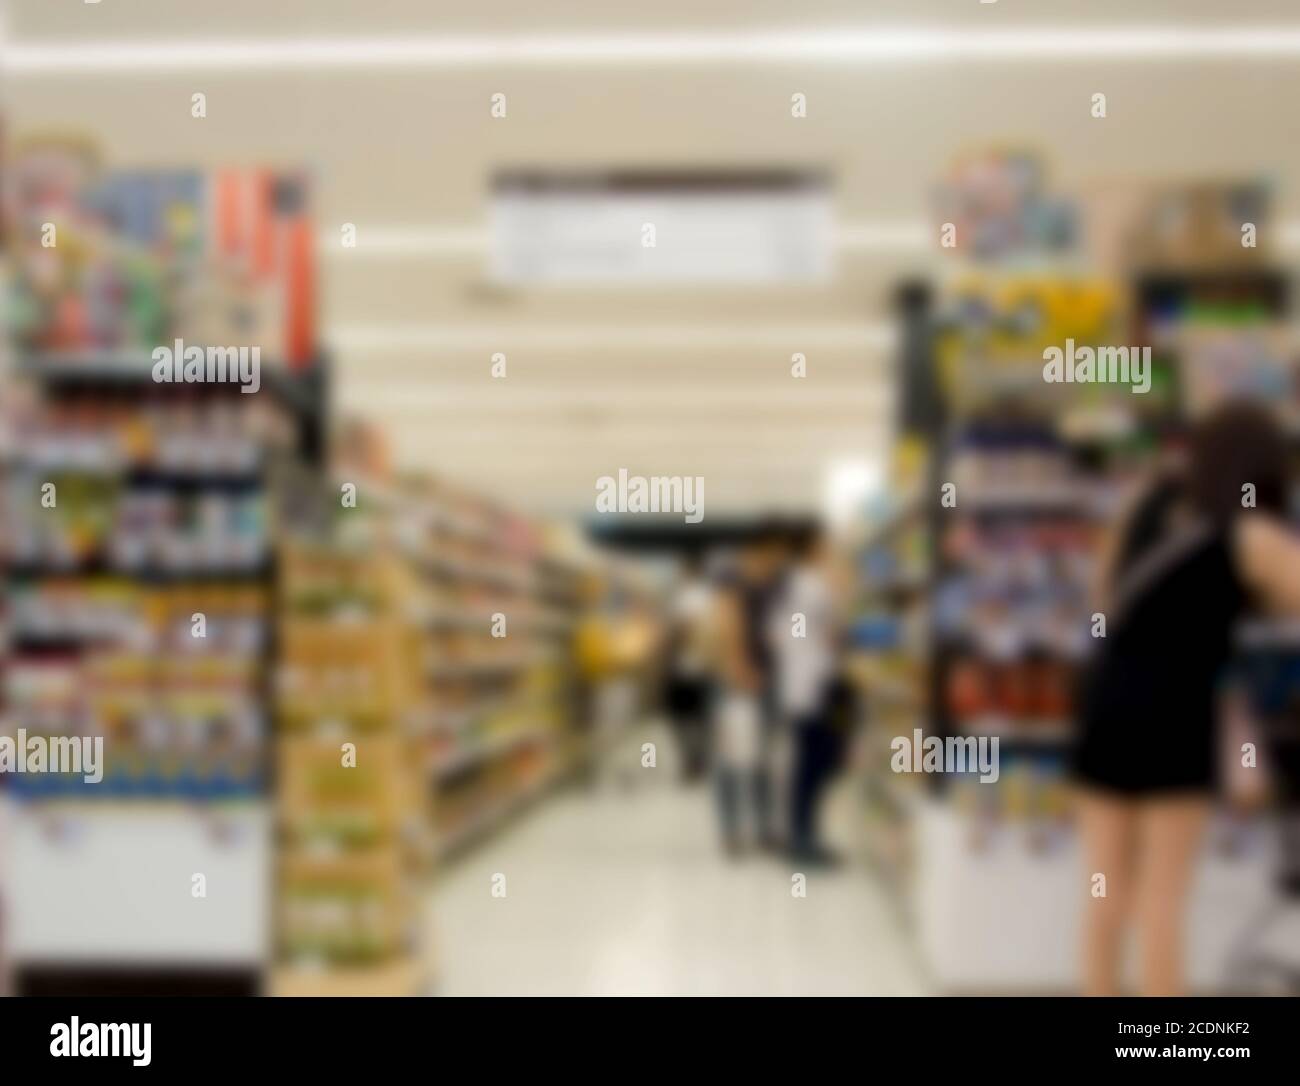 Blurred Supermarkets Stock Photo